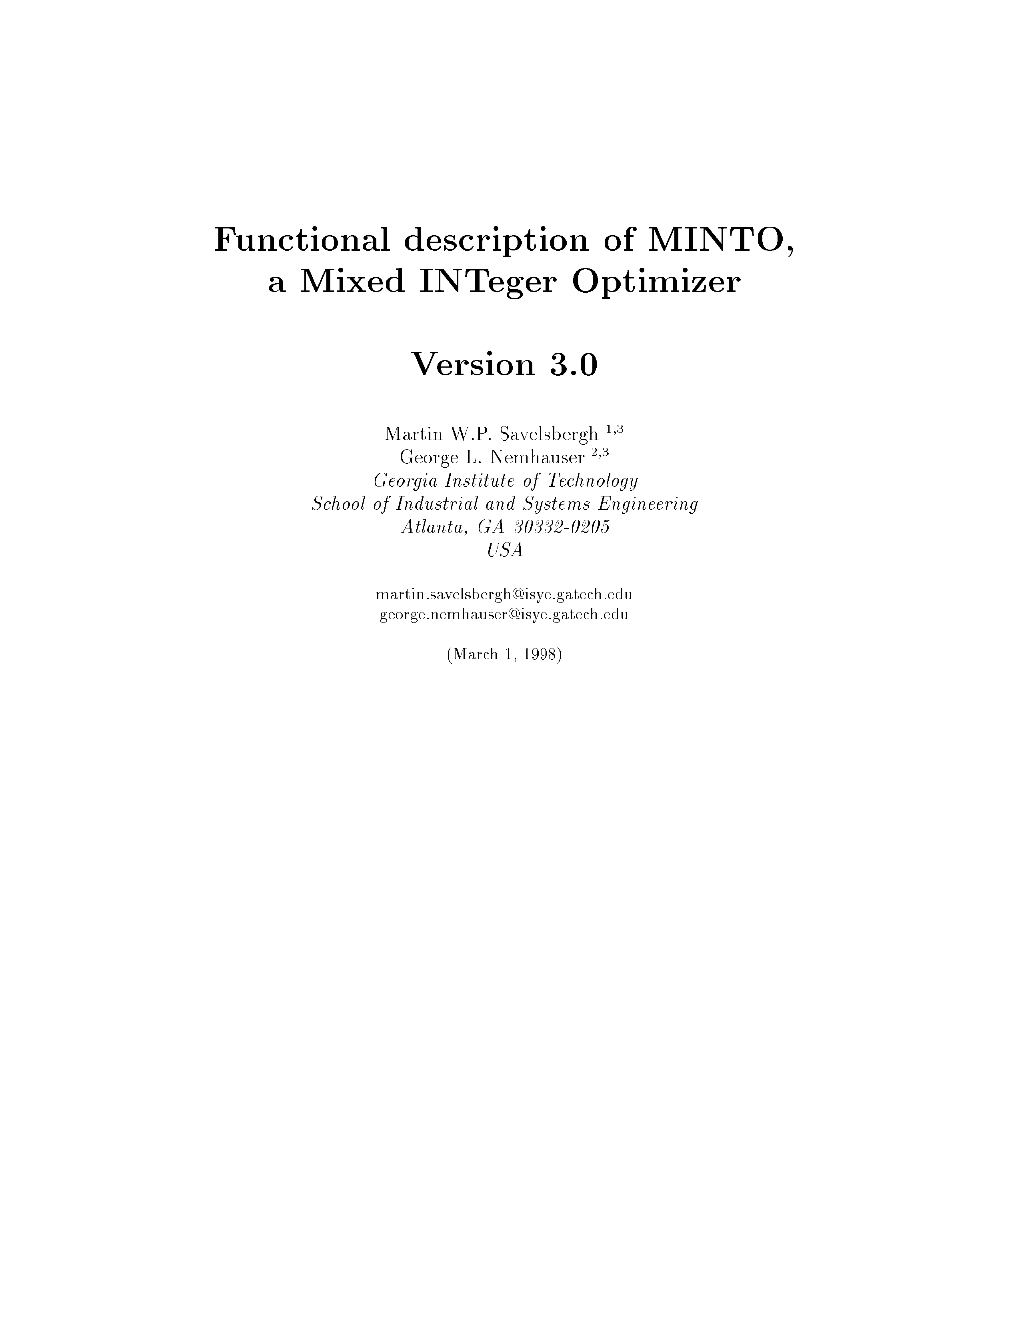 Functional Description of MINTO, a Mixed Integer Optimizer Version